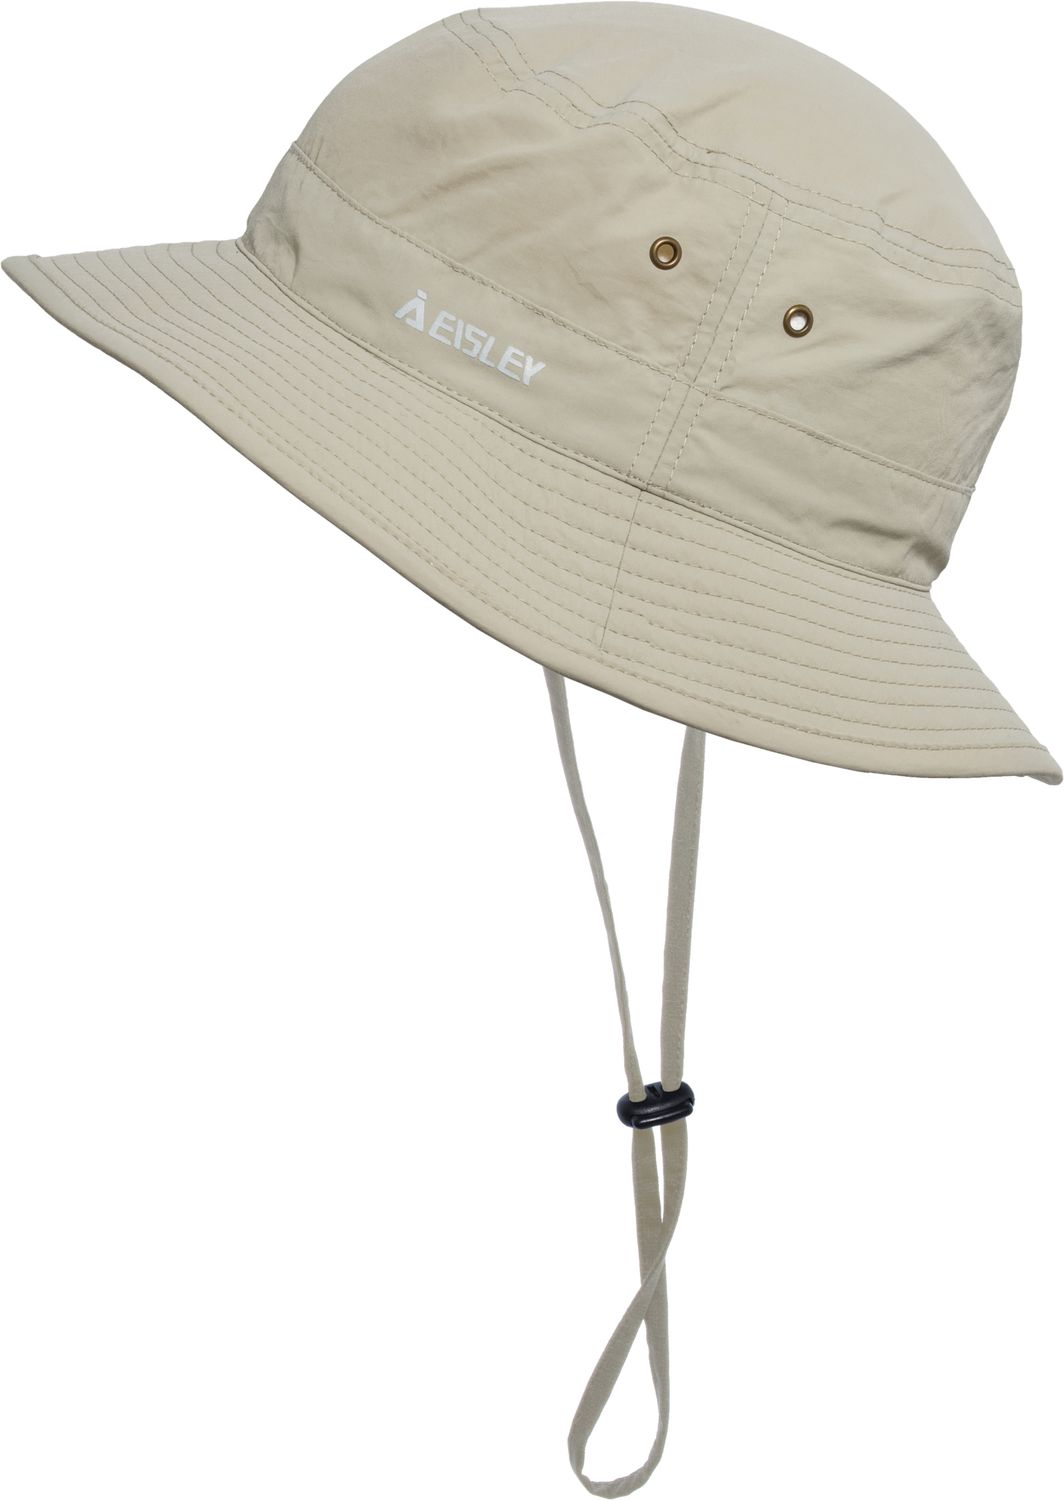 Eisley Kalahari knautschbarer Flapper Hut mit verstellbarem Kinnband von Eisley